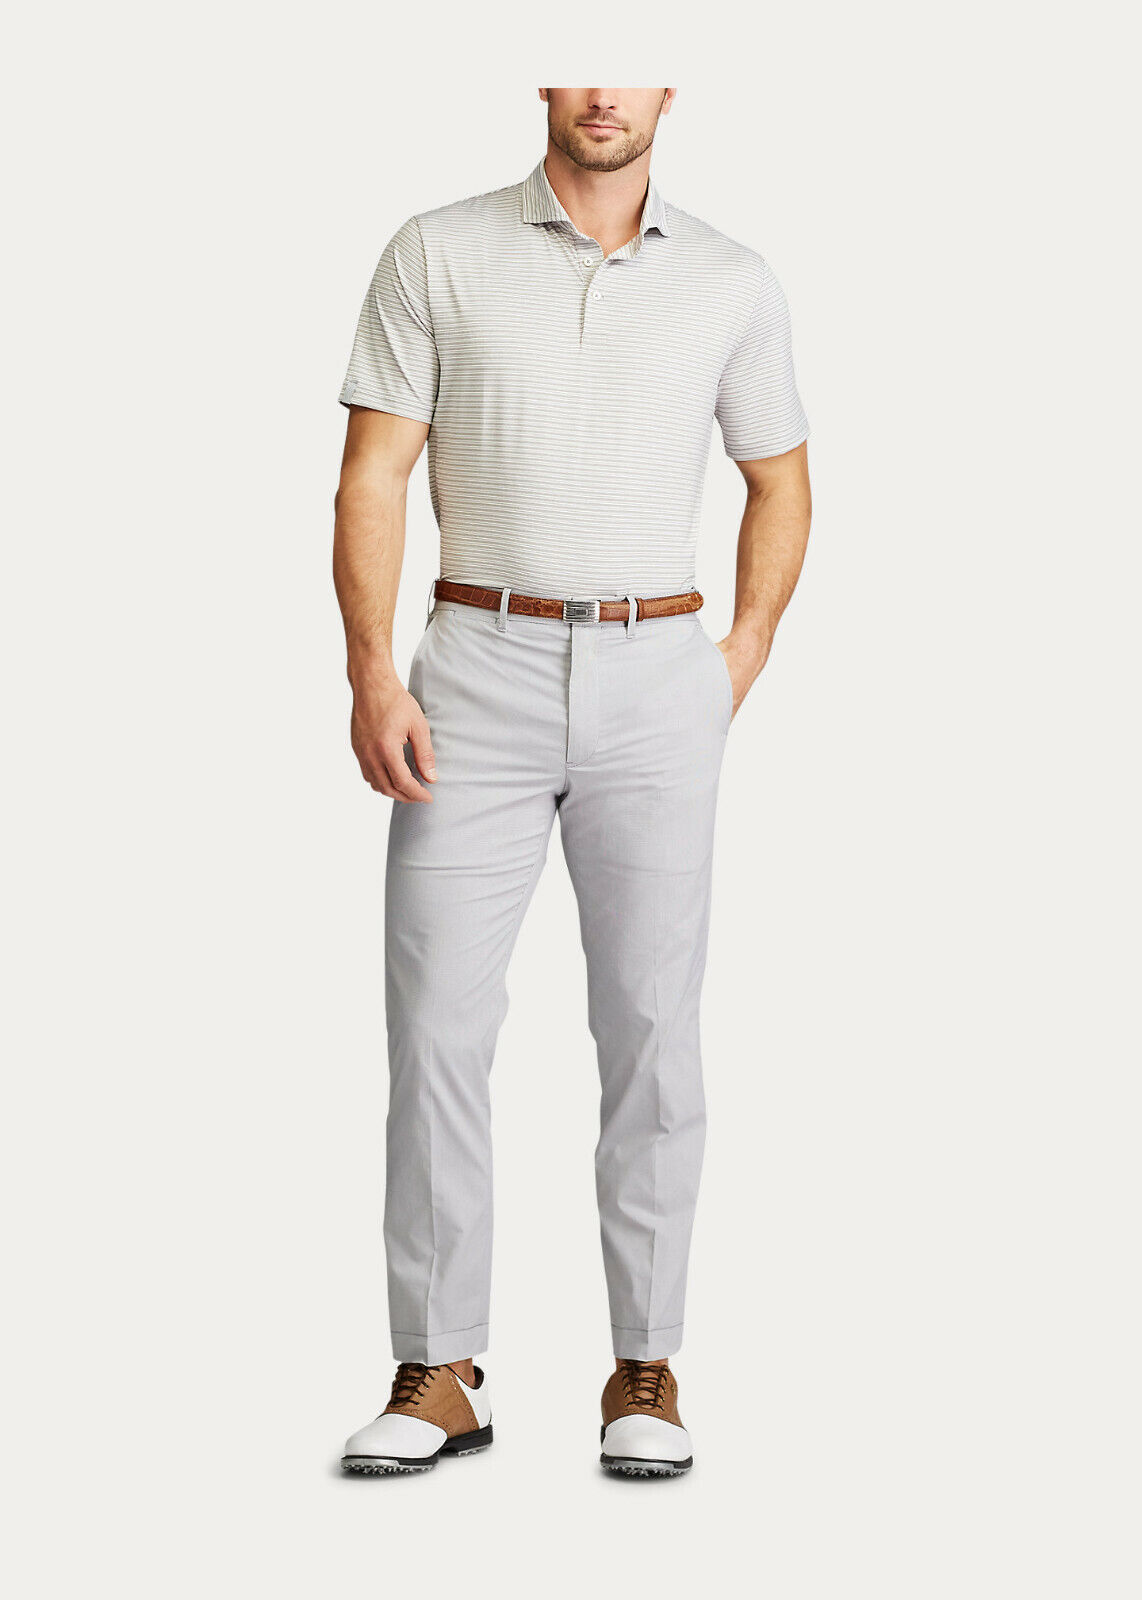 $125.00 Polo Ralph Lauren Golf Men's Mini-Check Tailored-Fit Pants, Grey,  42WX32